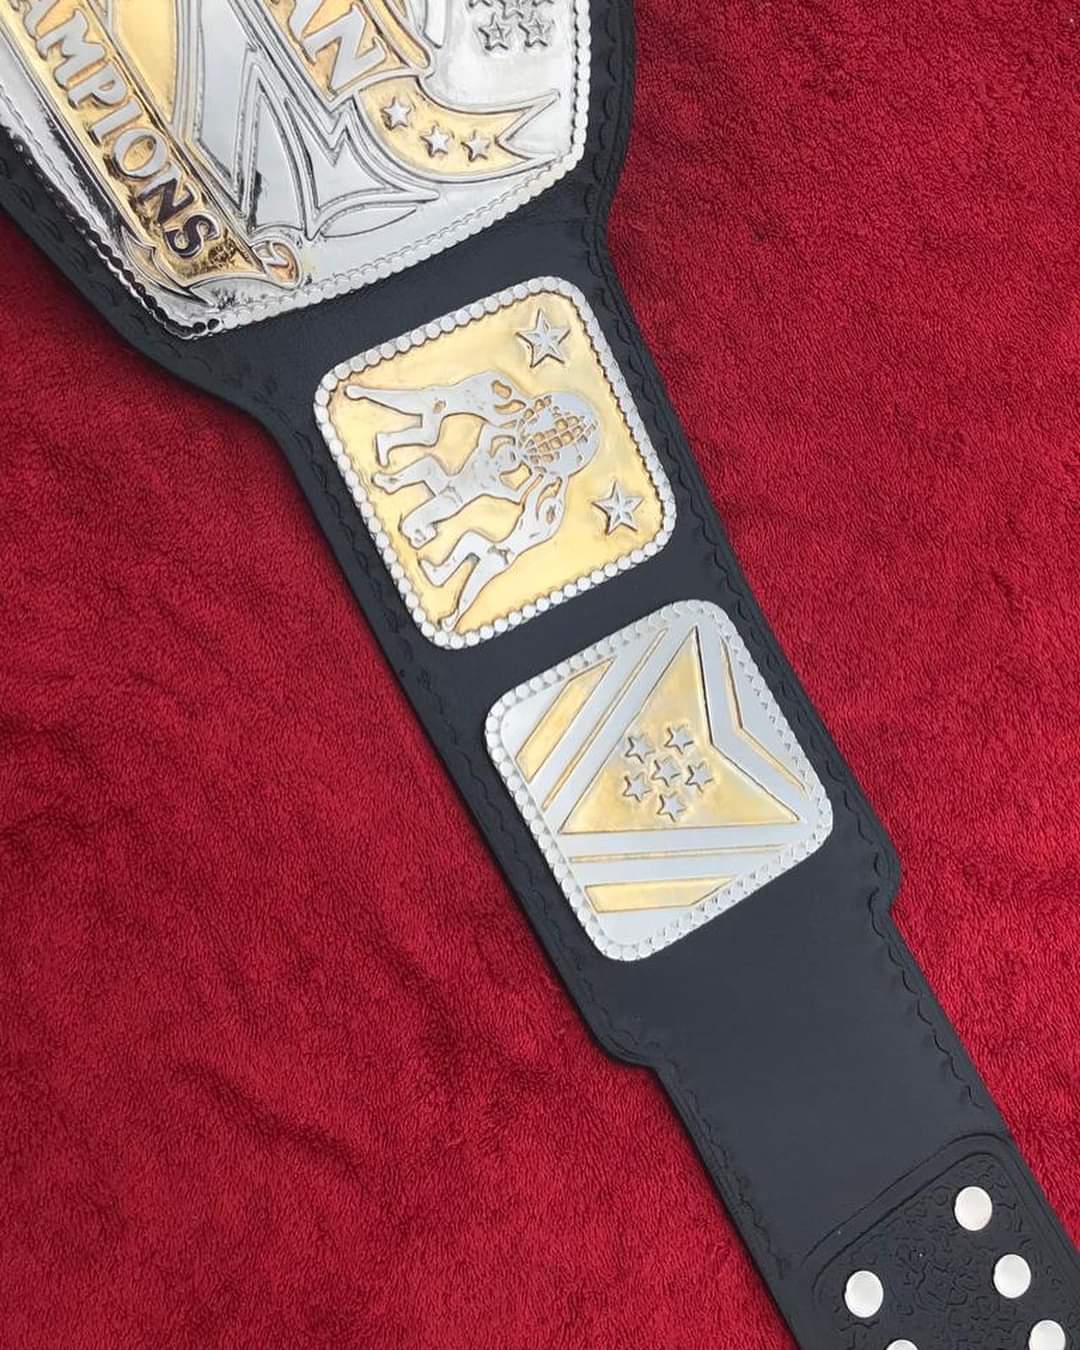 NWA Six man Tag Team Championship Belt